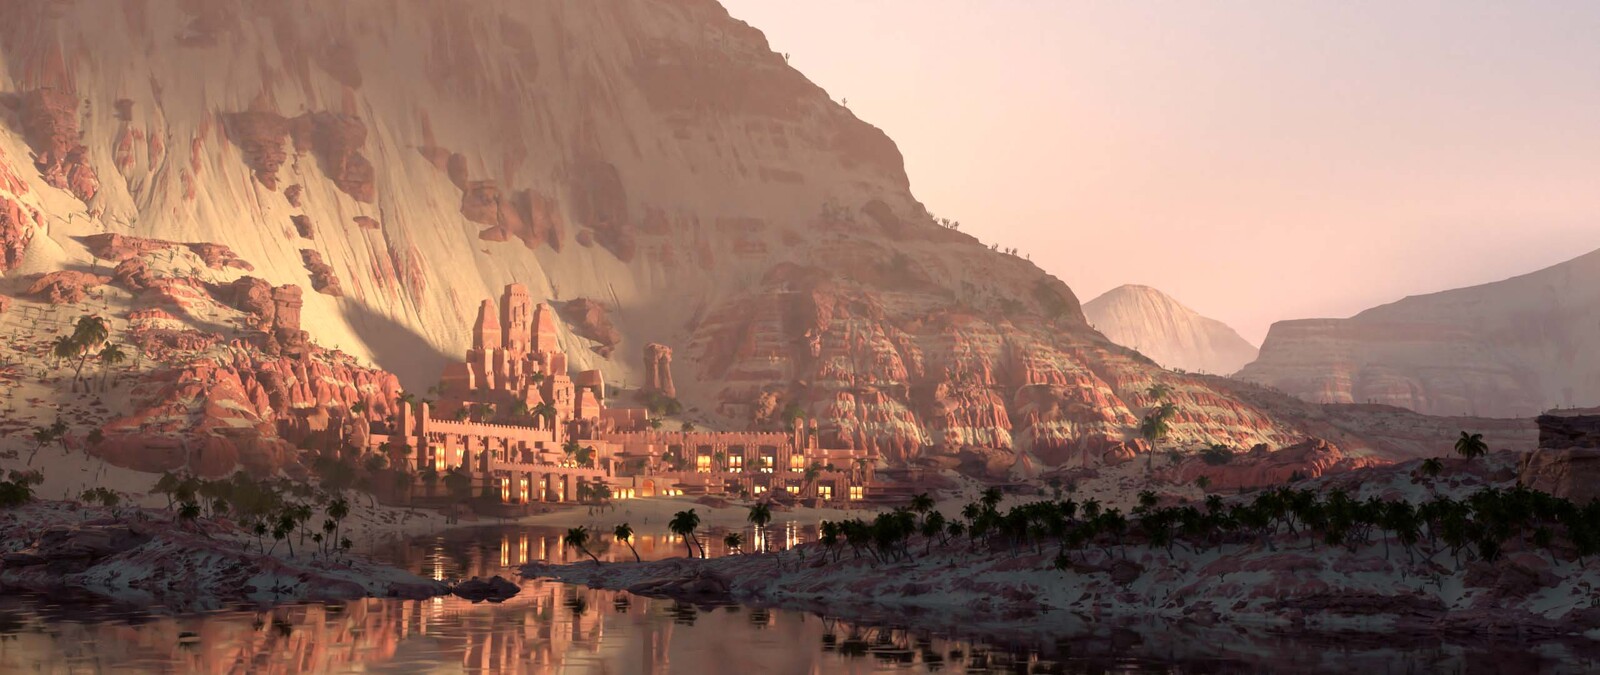 Desert Ruins - 3D render and clip